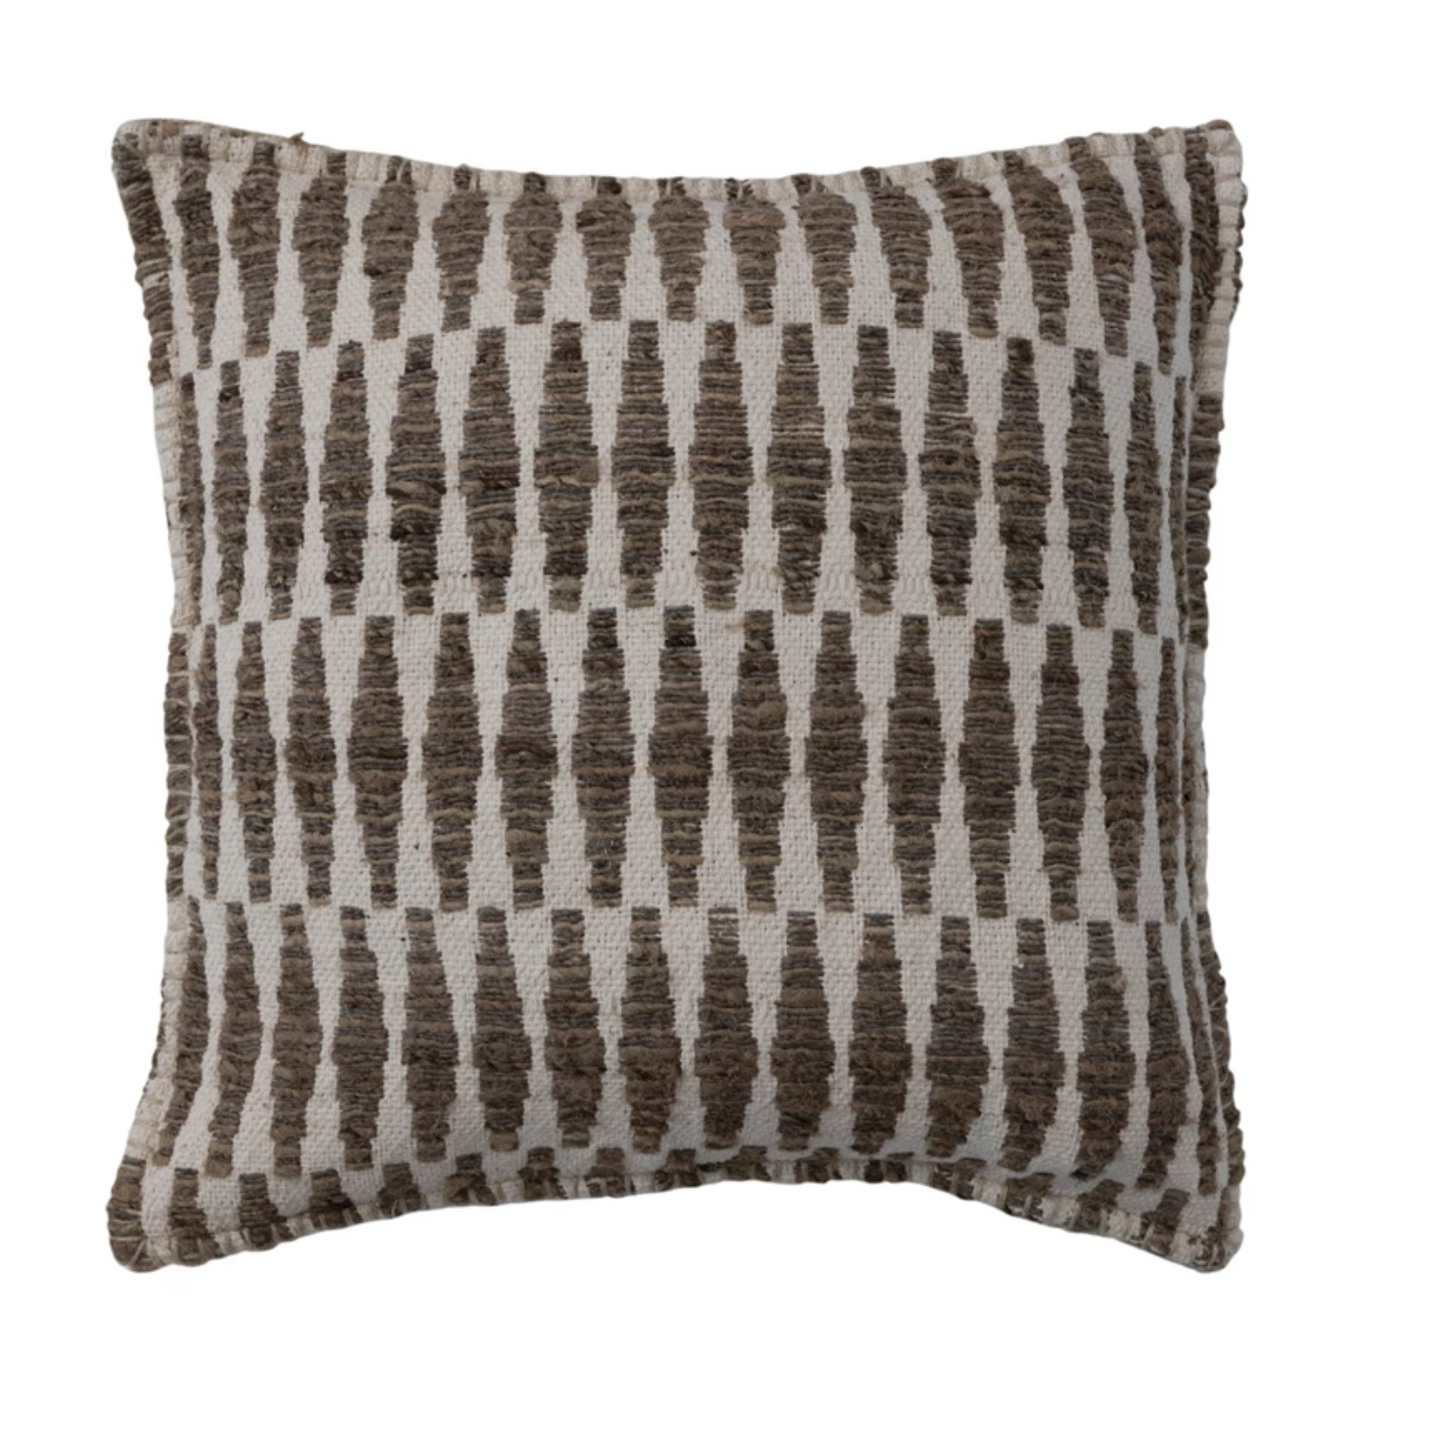 Blanket Stitch Pillow